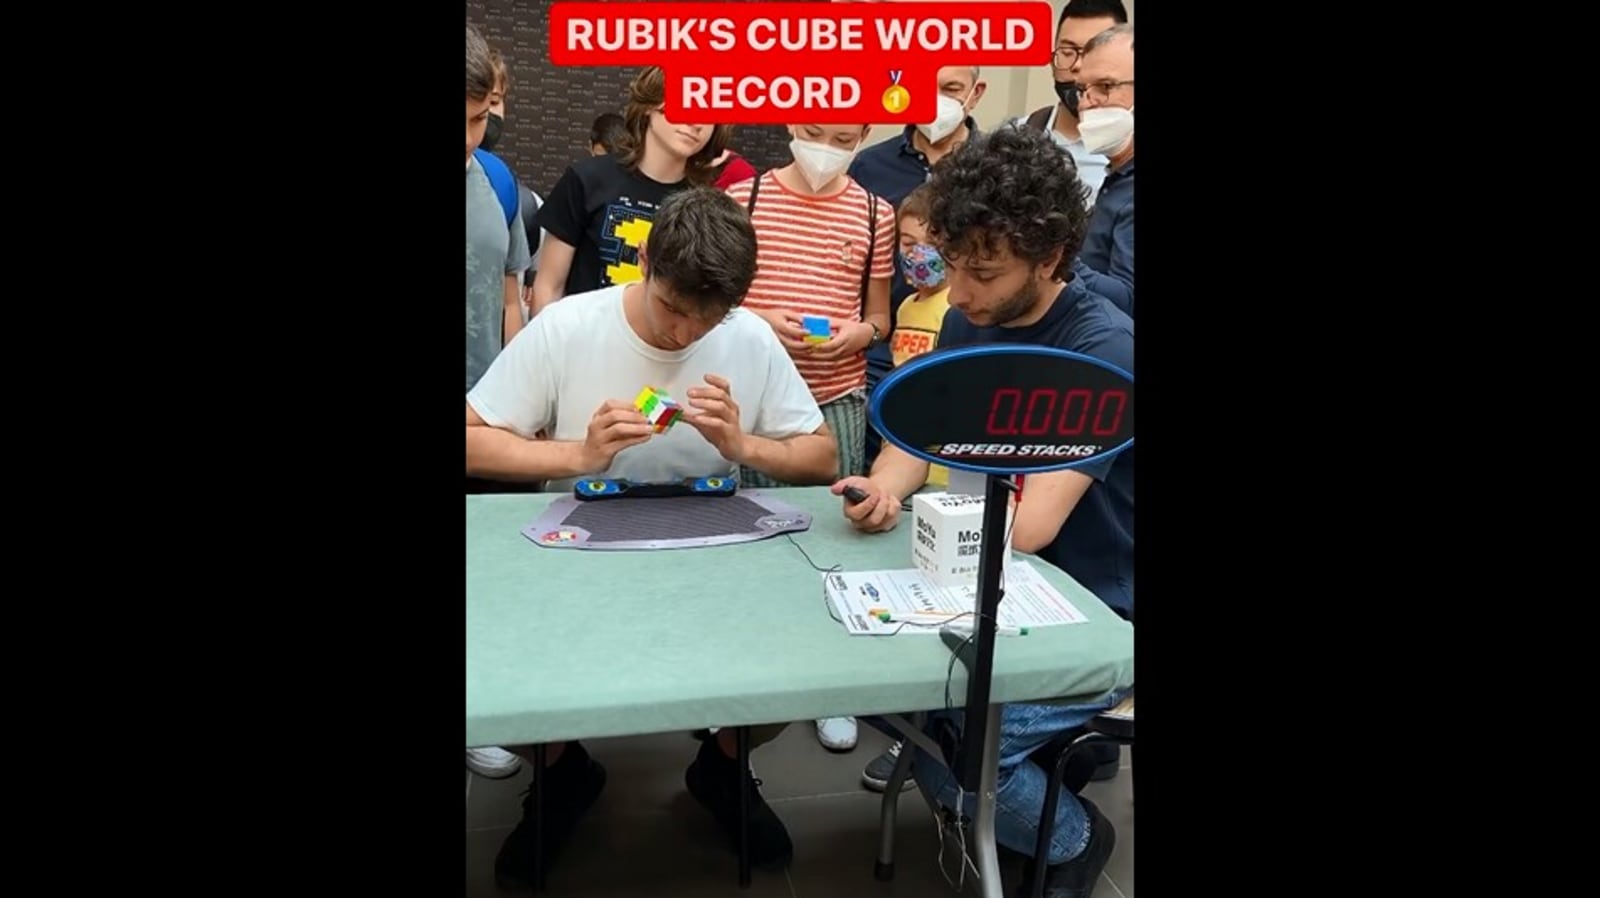 Manusia “memecahkan” Rubik’s Cube dalam lebih dari satu detik.  Dia berbagi kebenaran di balik video |  Sedang tren